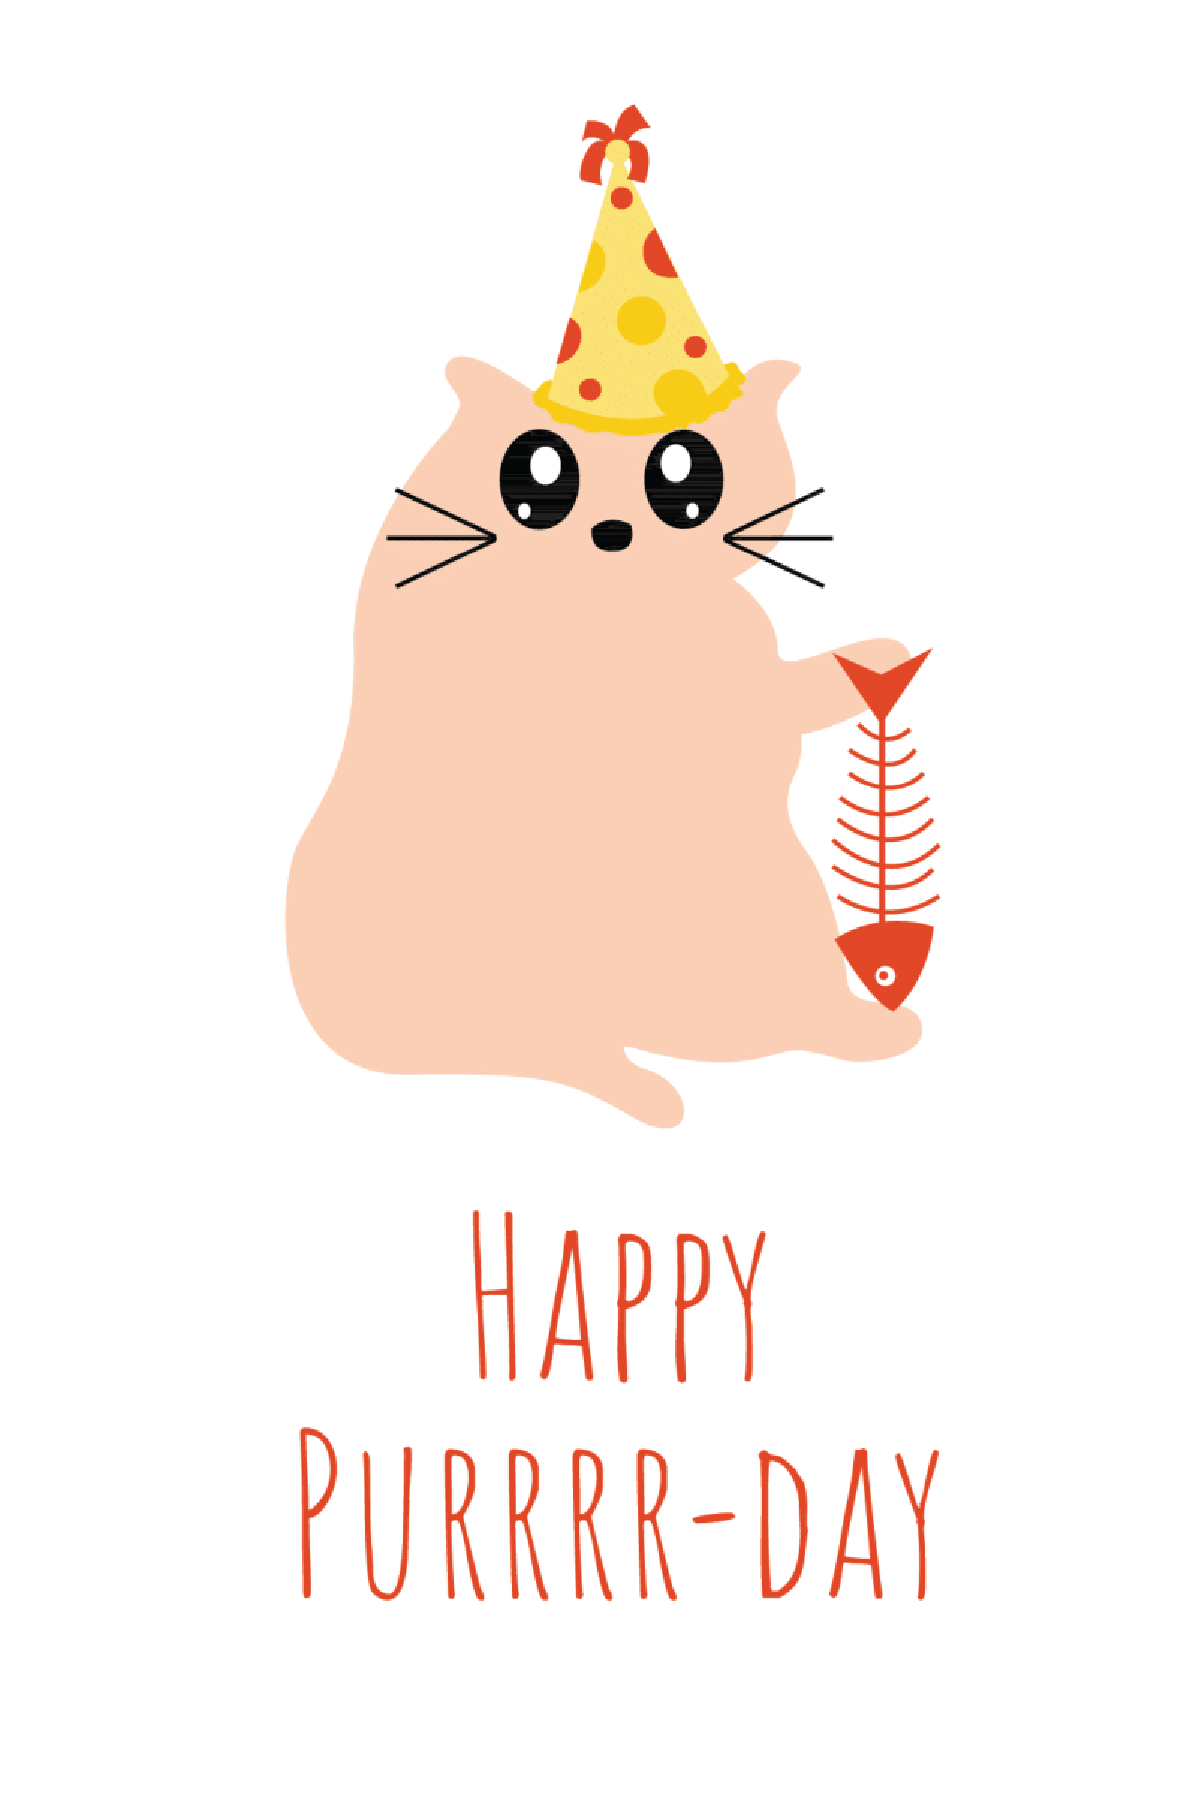 Happy Purrrr-day